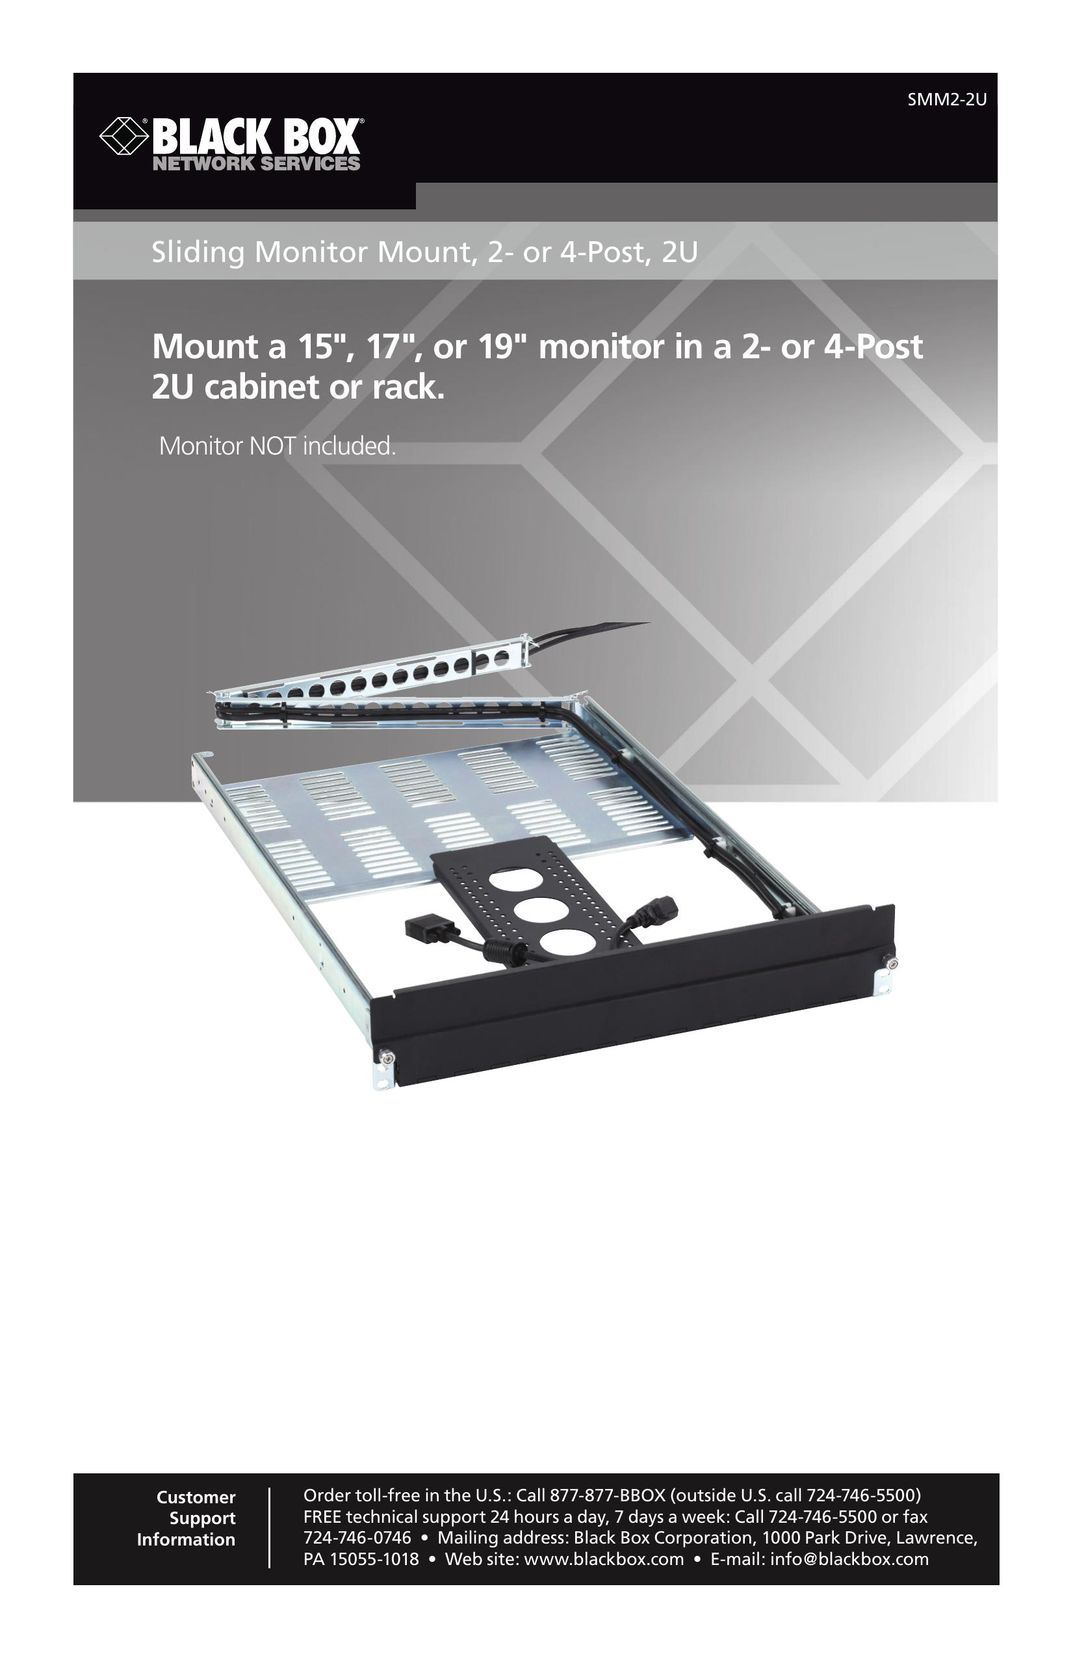 Black Box Sliding Monitor Mount, 2- or 4-Post, 2U TV Mount User Manual